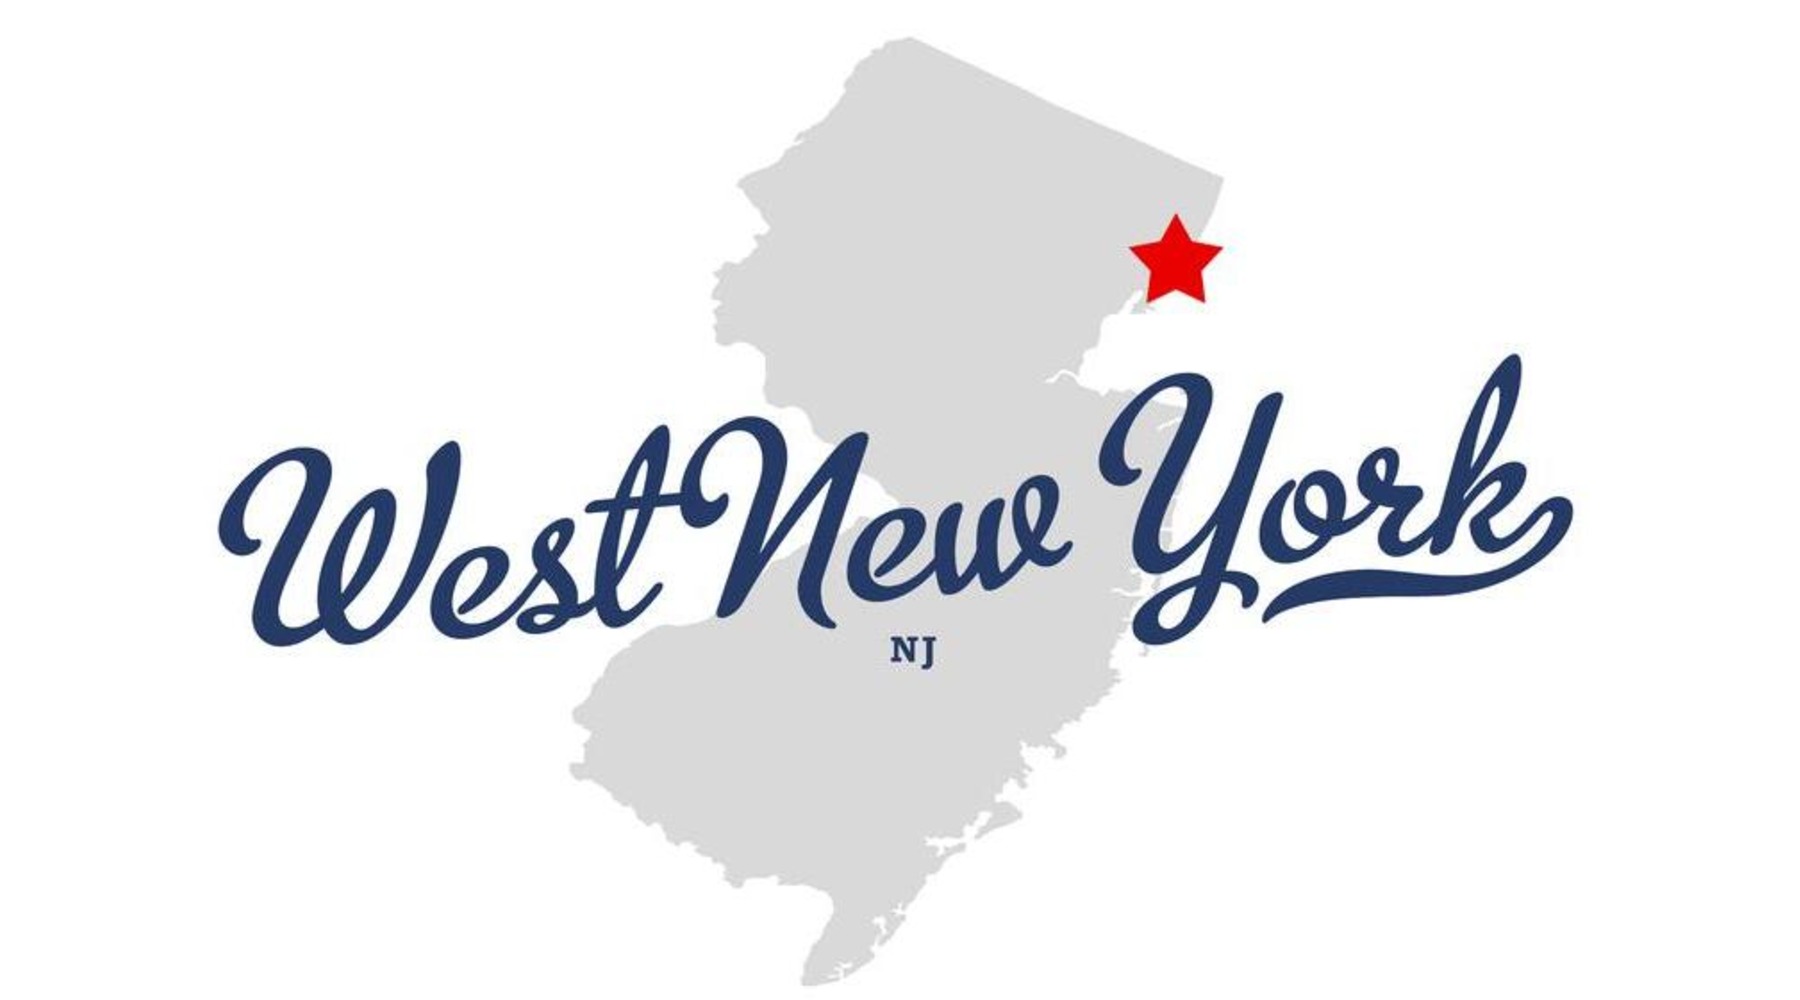 West New York, 07093